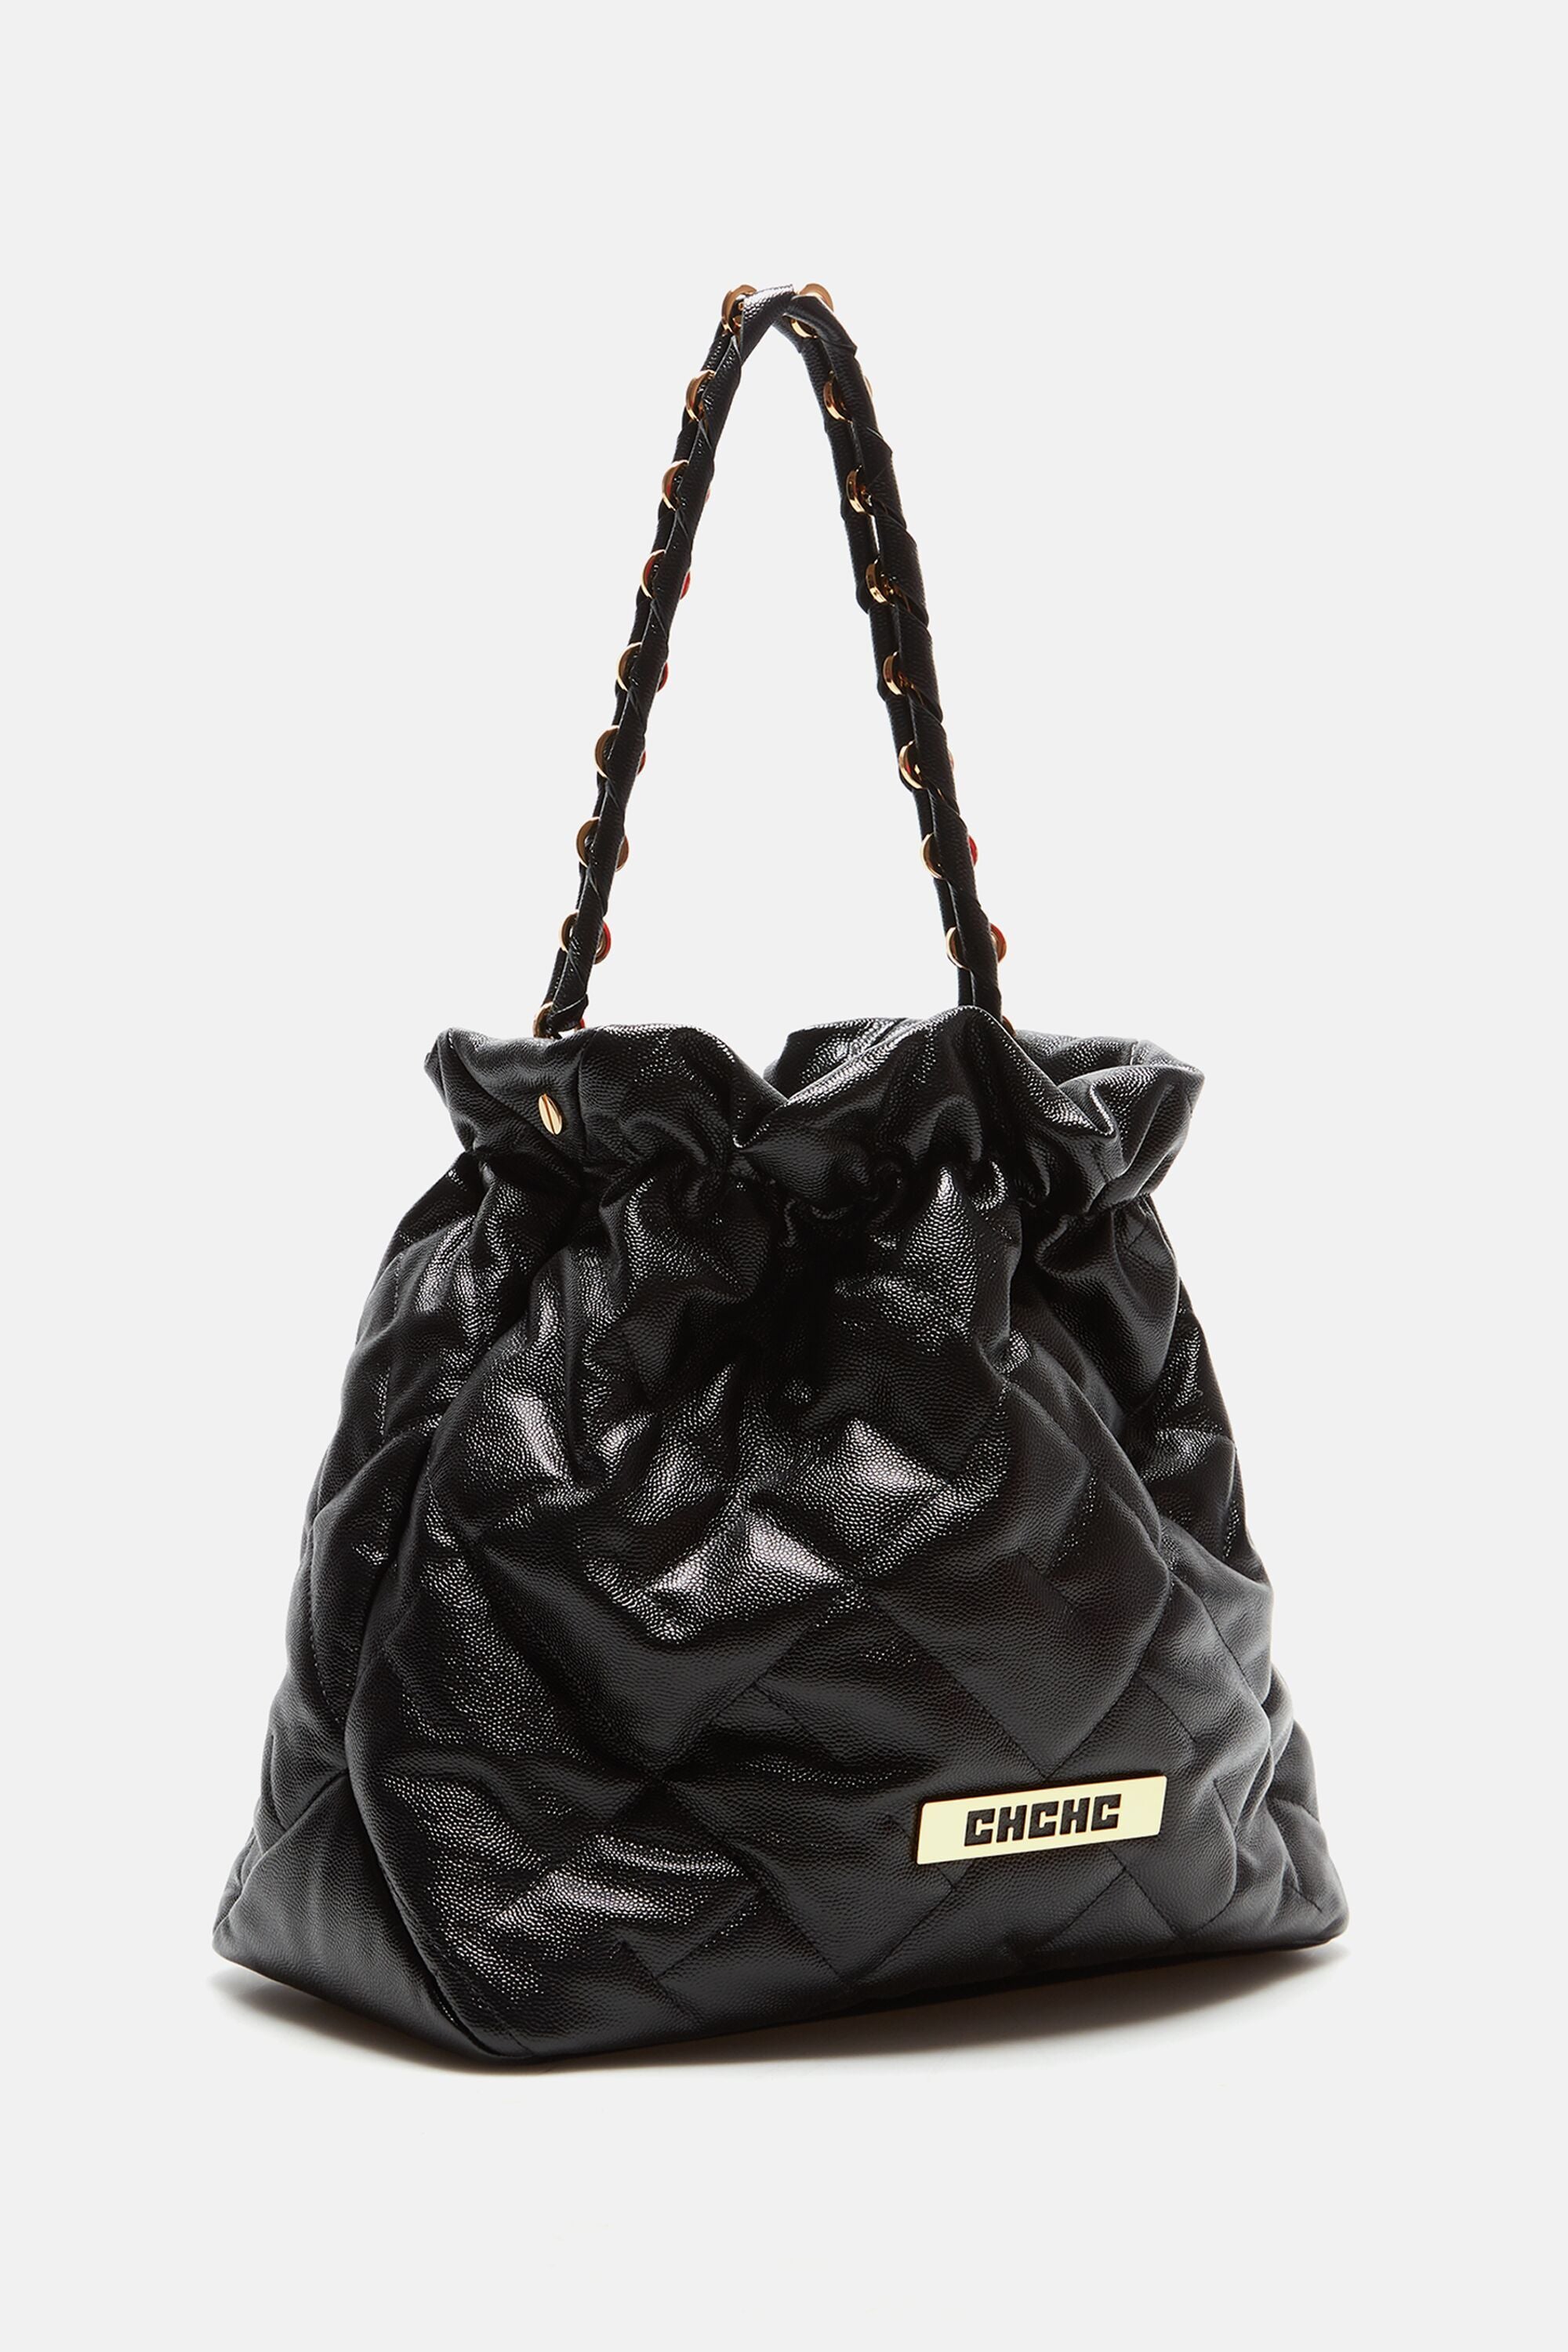 Carolina Herrera Clutch Bimba 1 Black Bag